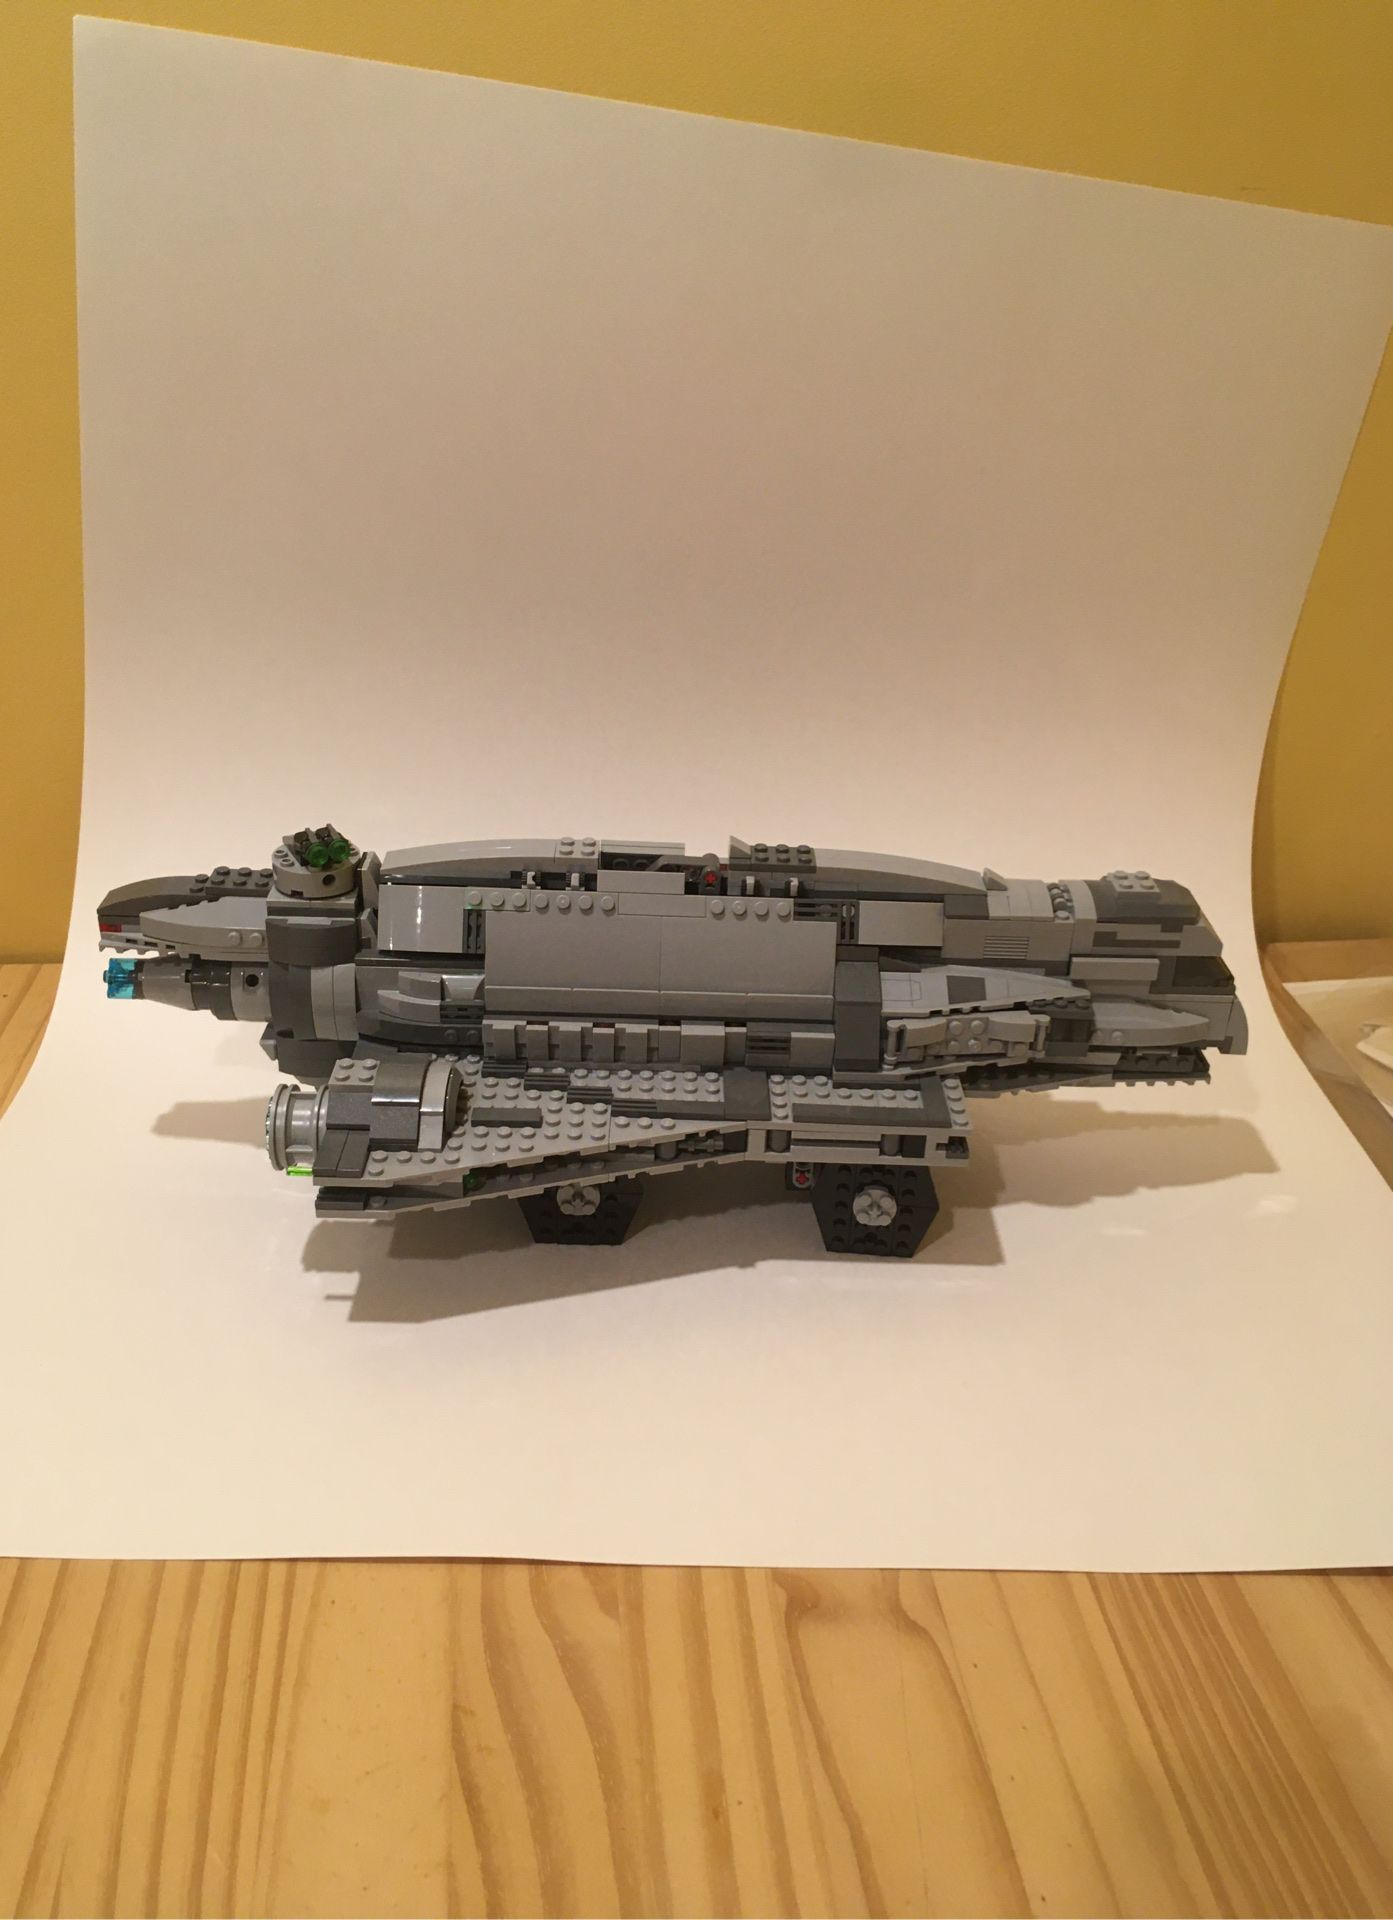 Imperial transport LEGO set worth 150